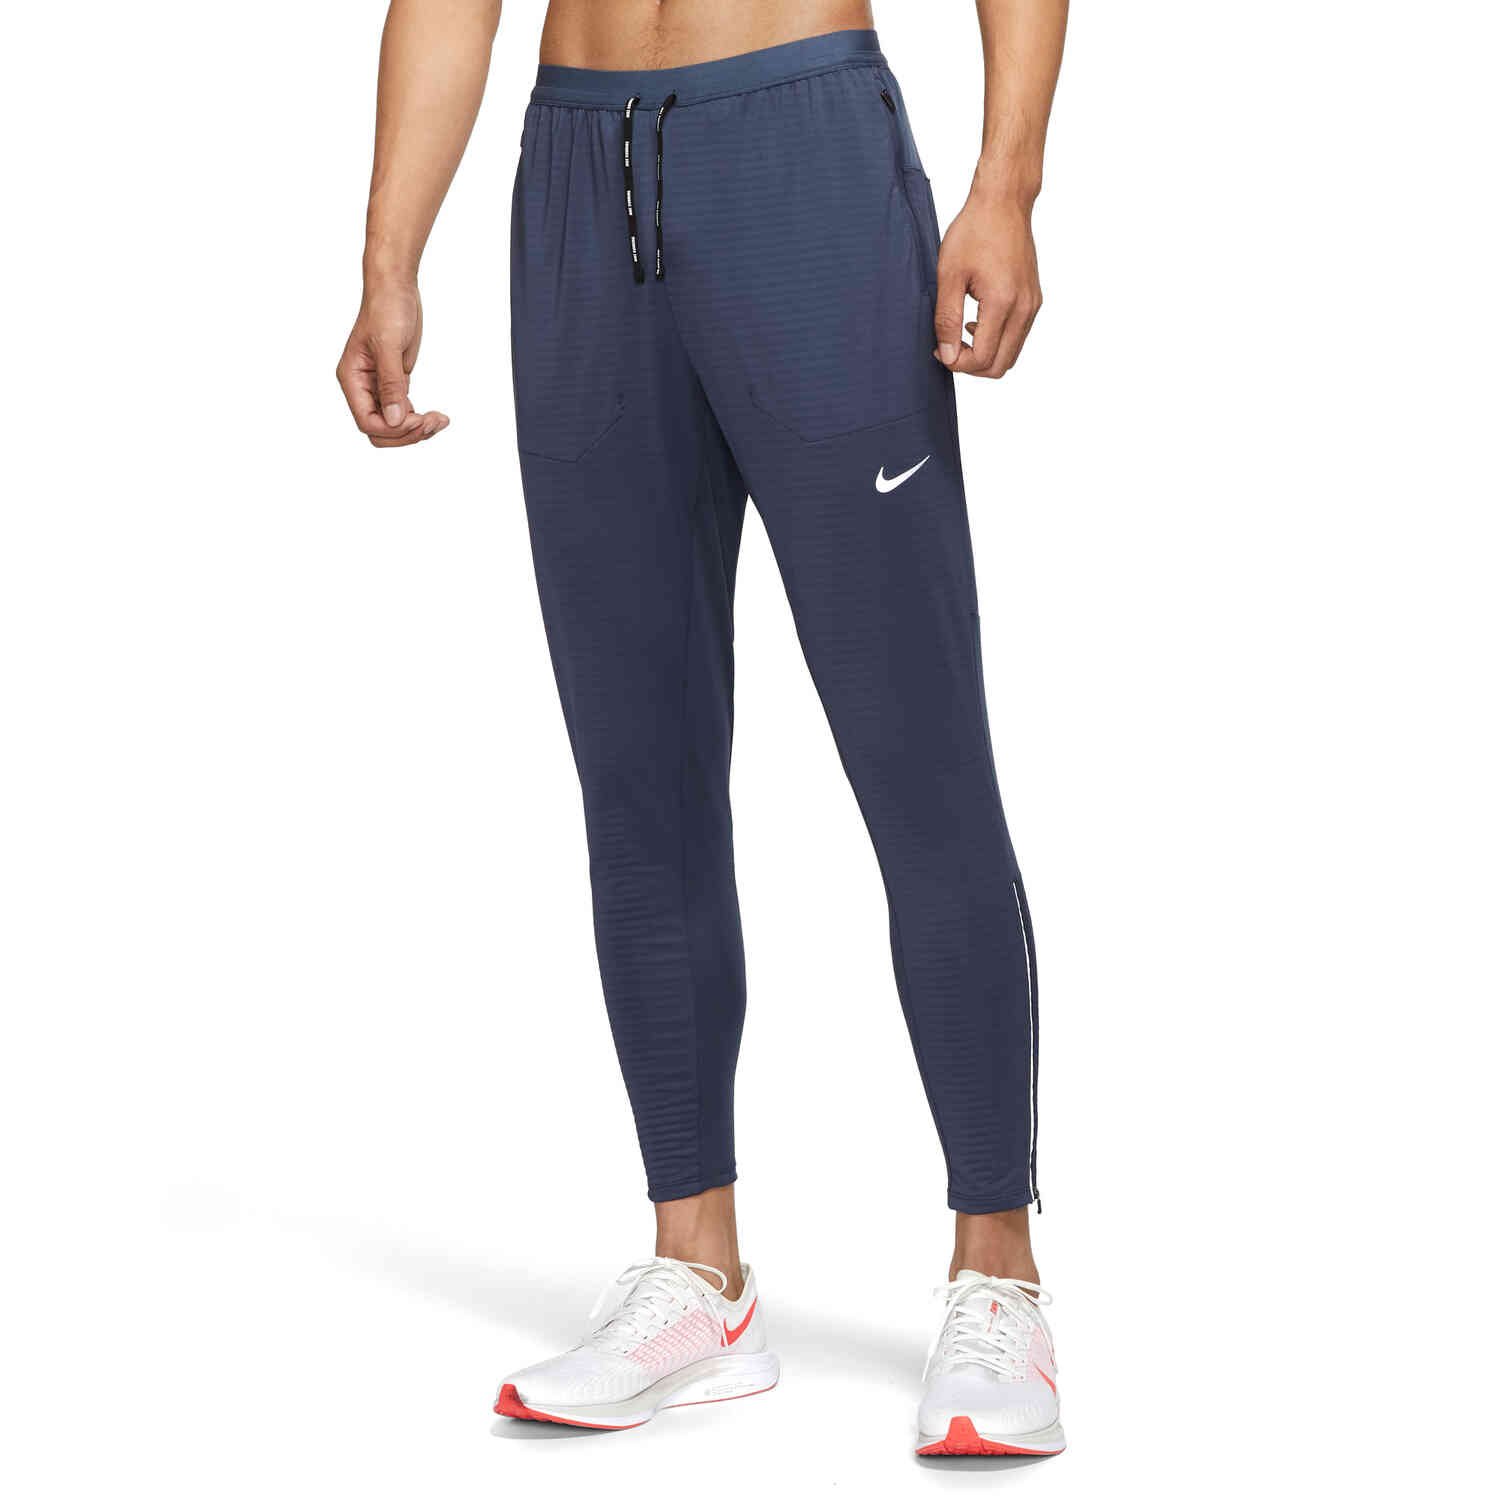 Nike Phenom Elite Wild RUN Running Pants Reflective Pocket CU5730 364 XL  $125